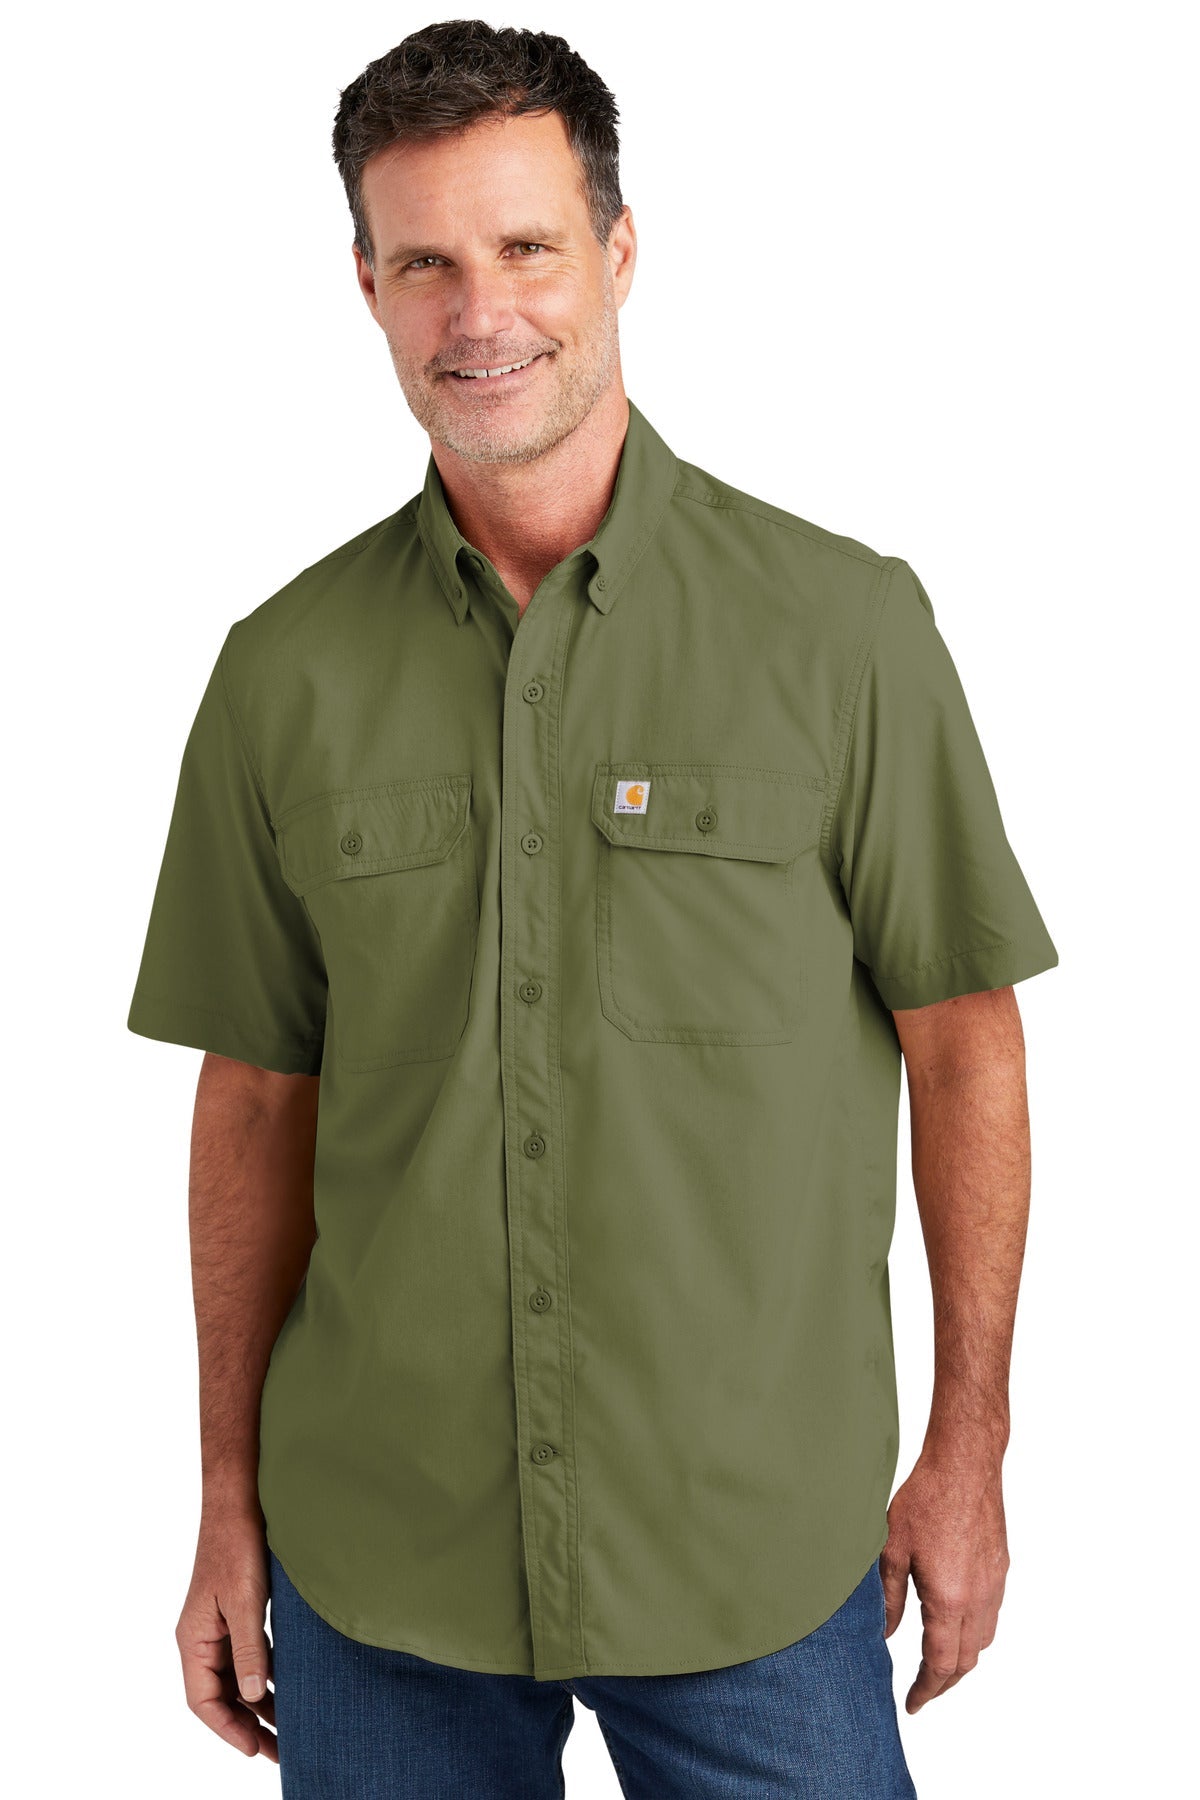 Carhartt Force® Solid Short Sleeve Shirt CT105292 - DFW Impression